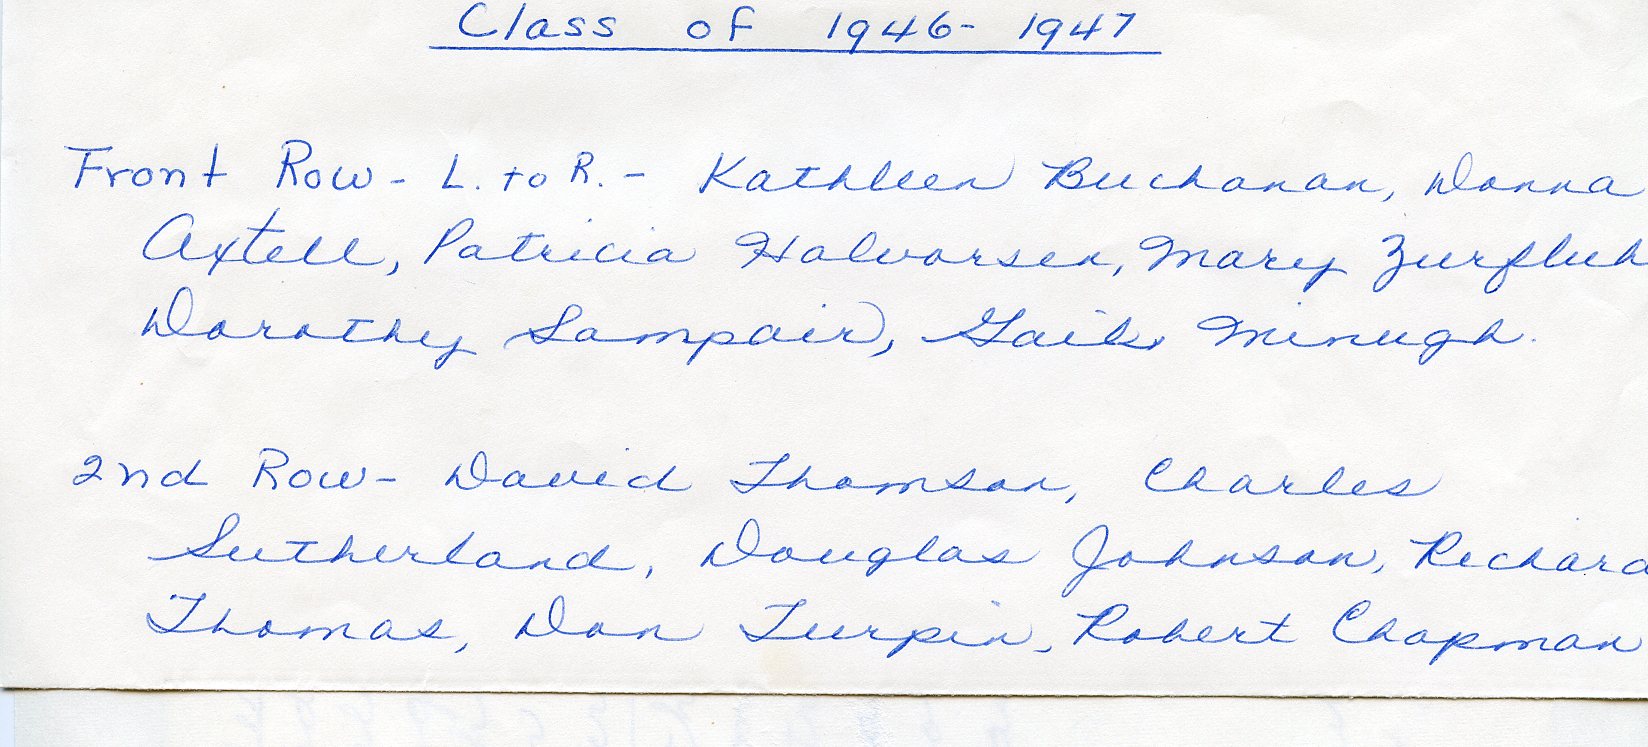 1948 8th names